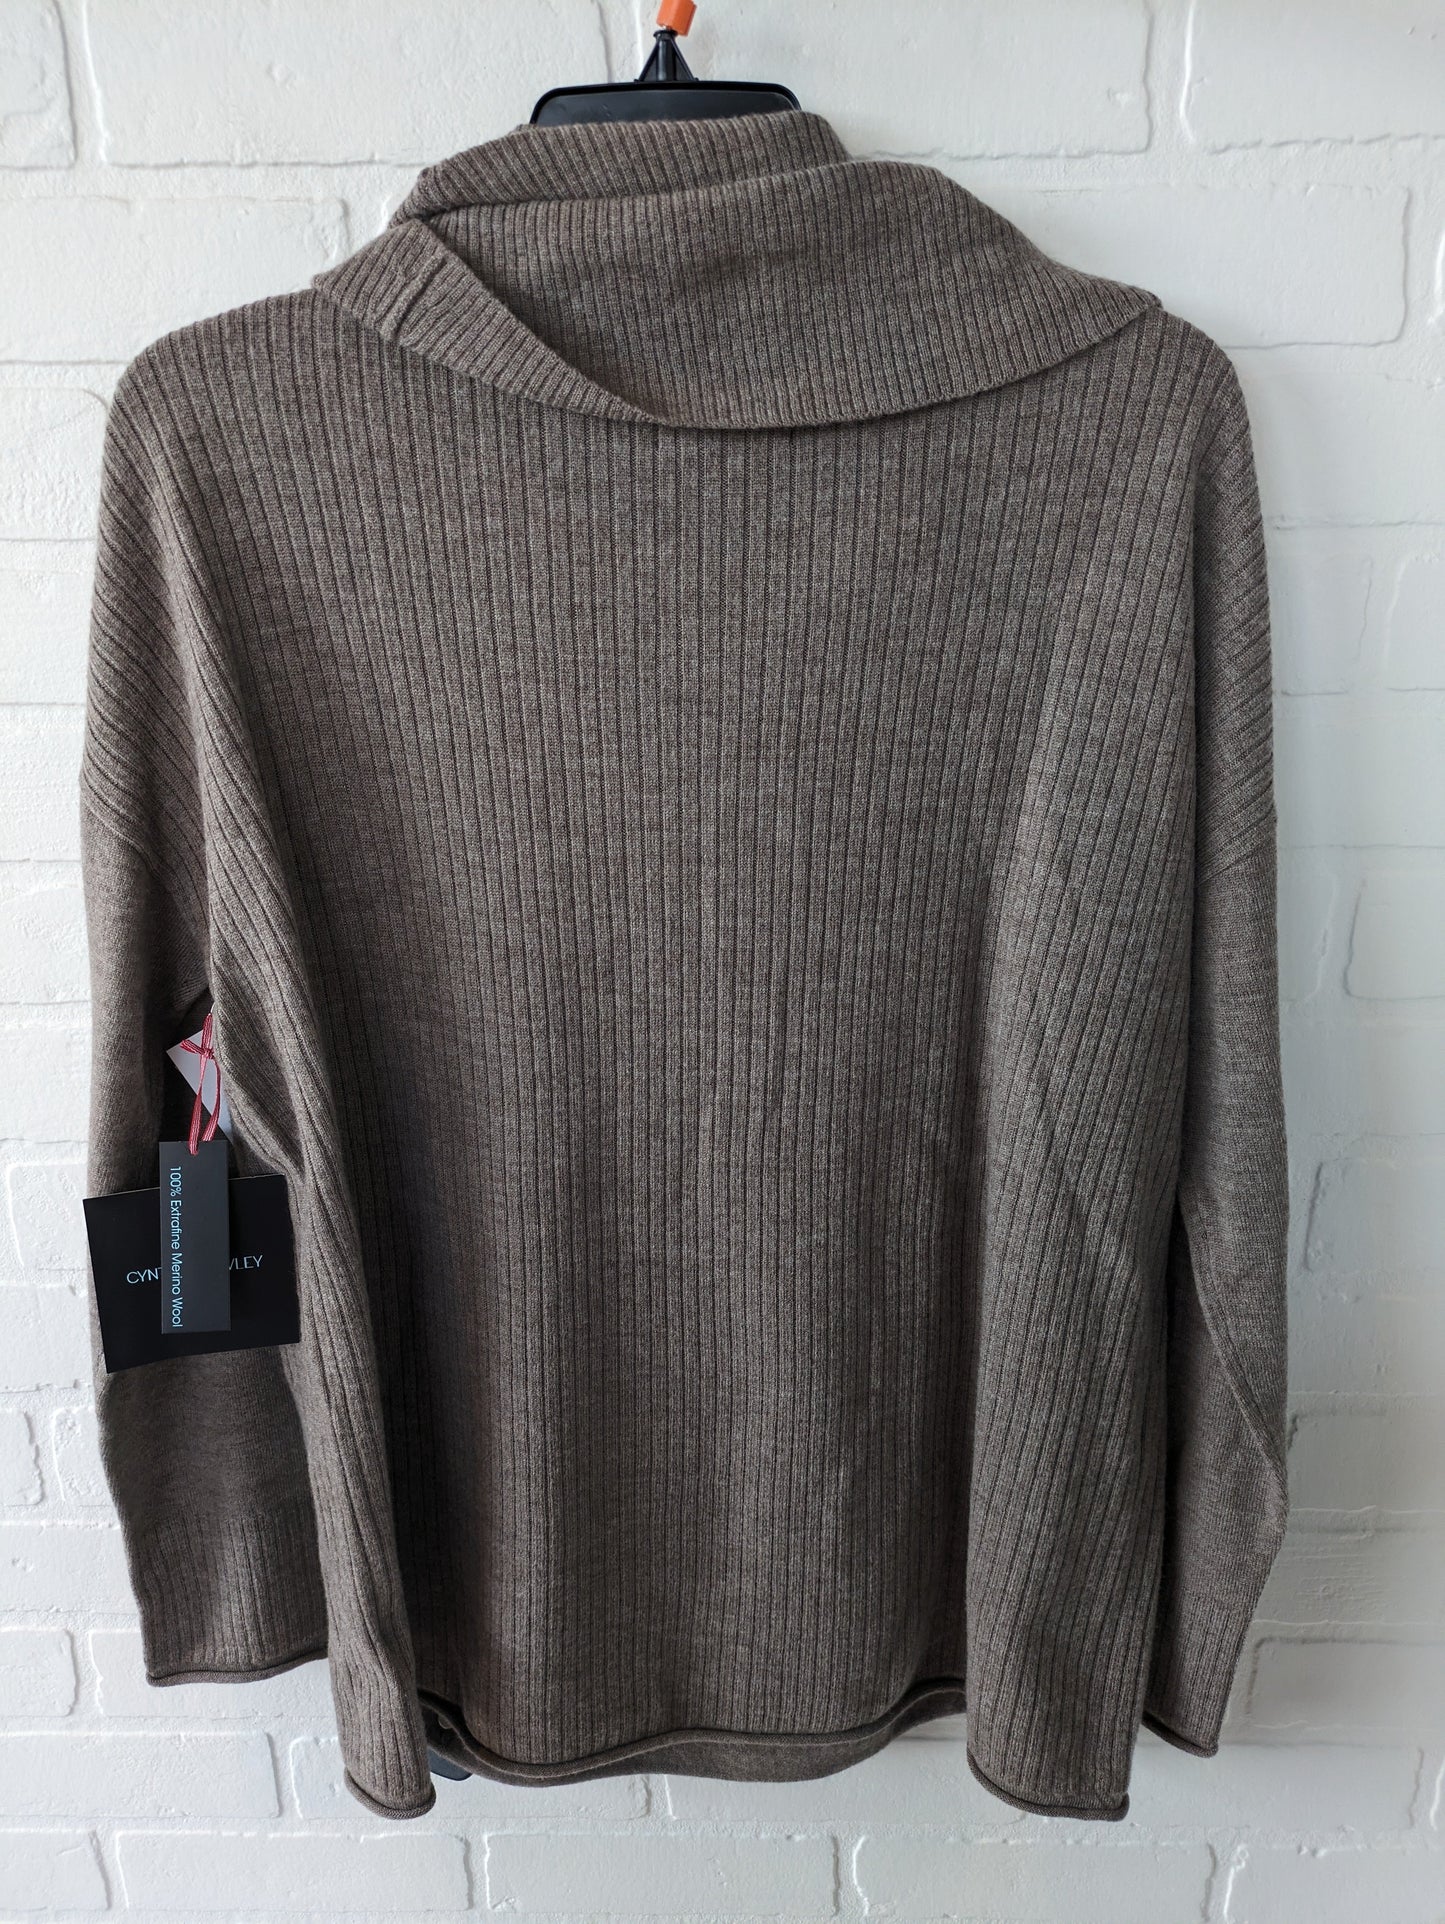 Sweater By Cynthia Rowley  Size: Xl